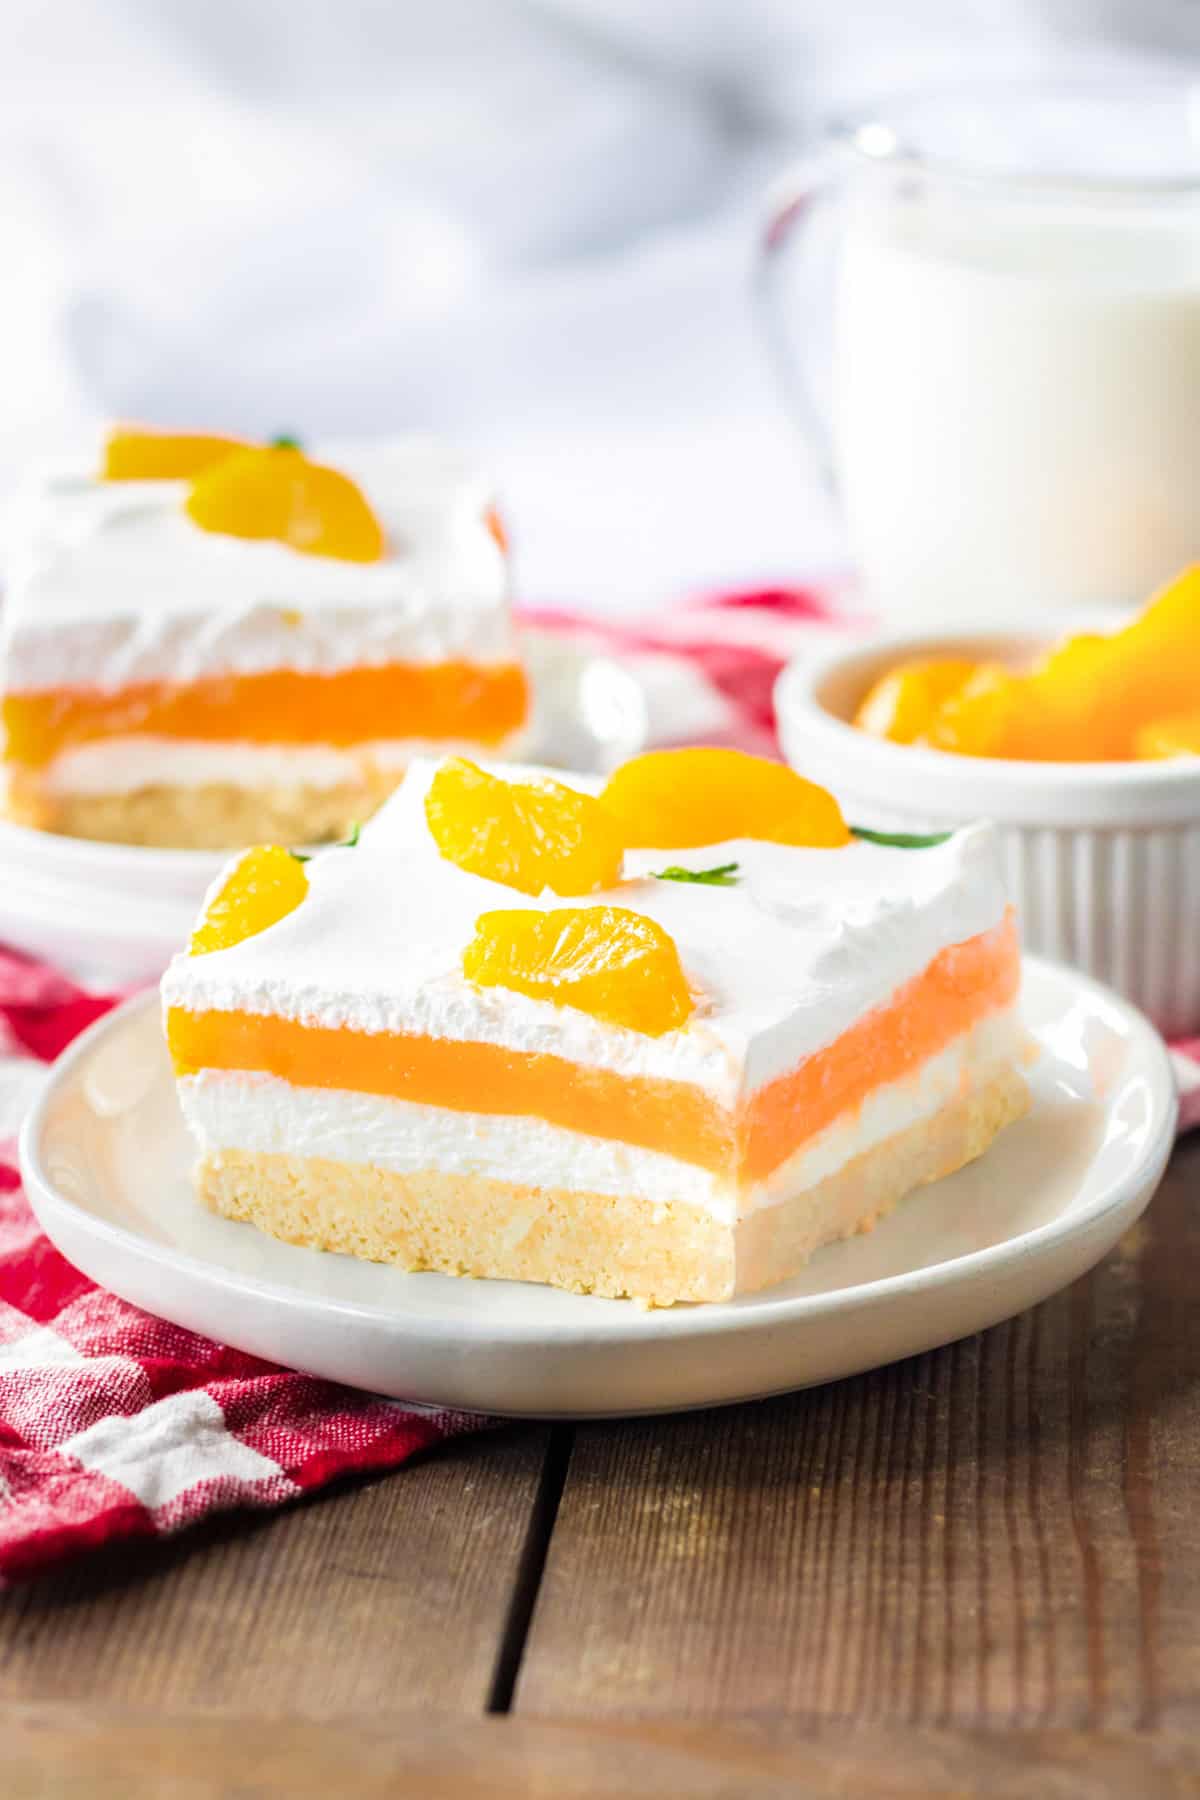 Orange Creamsicle Cake